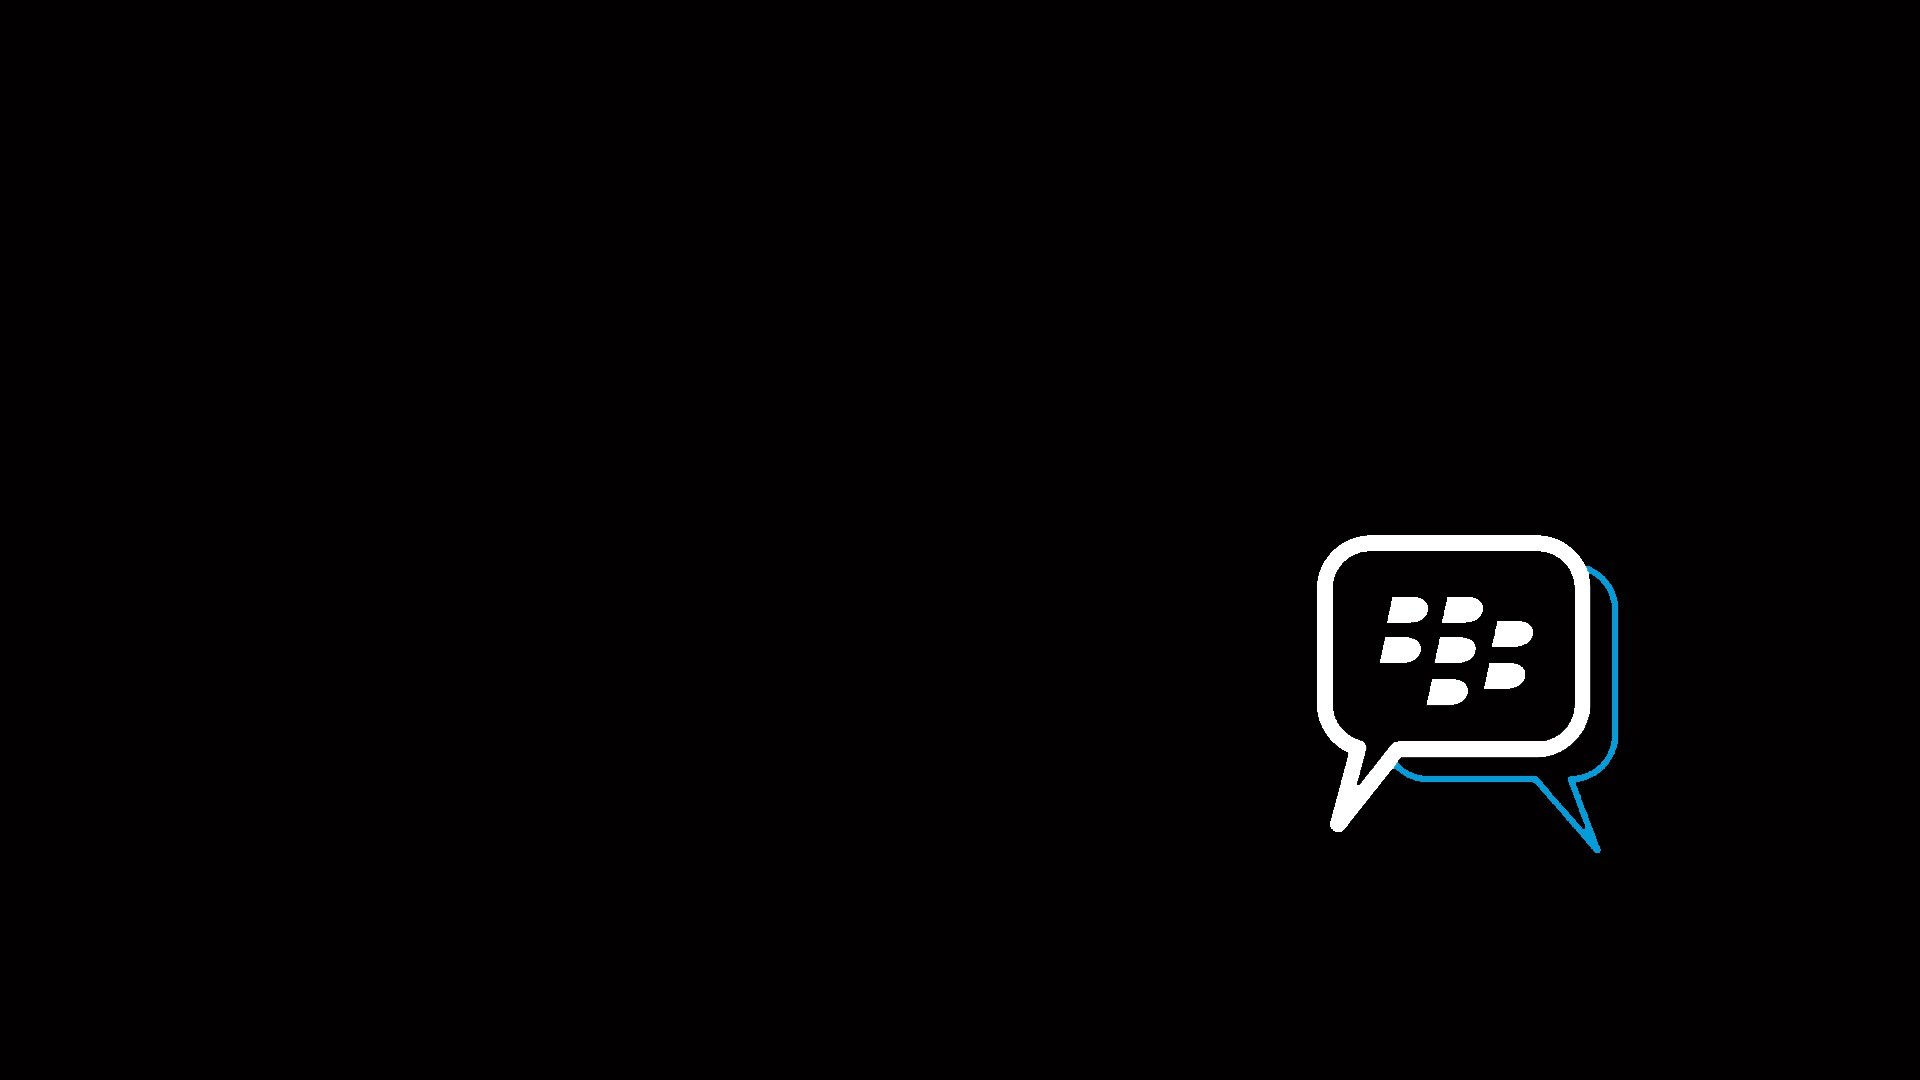 1920x1080 Blackberry Bold Logo Wallpaper Blackberry messenger hd 